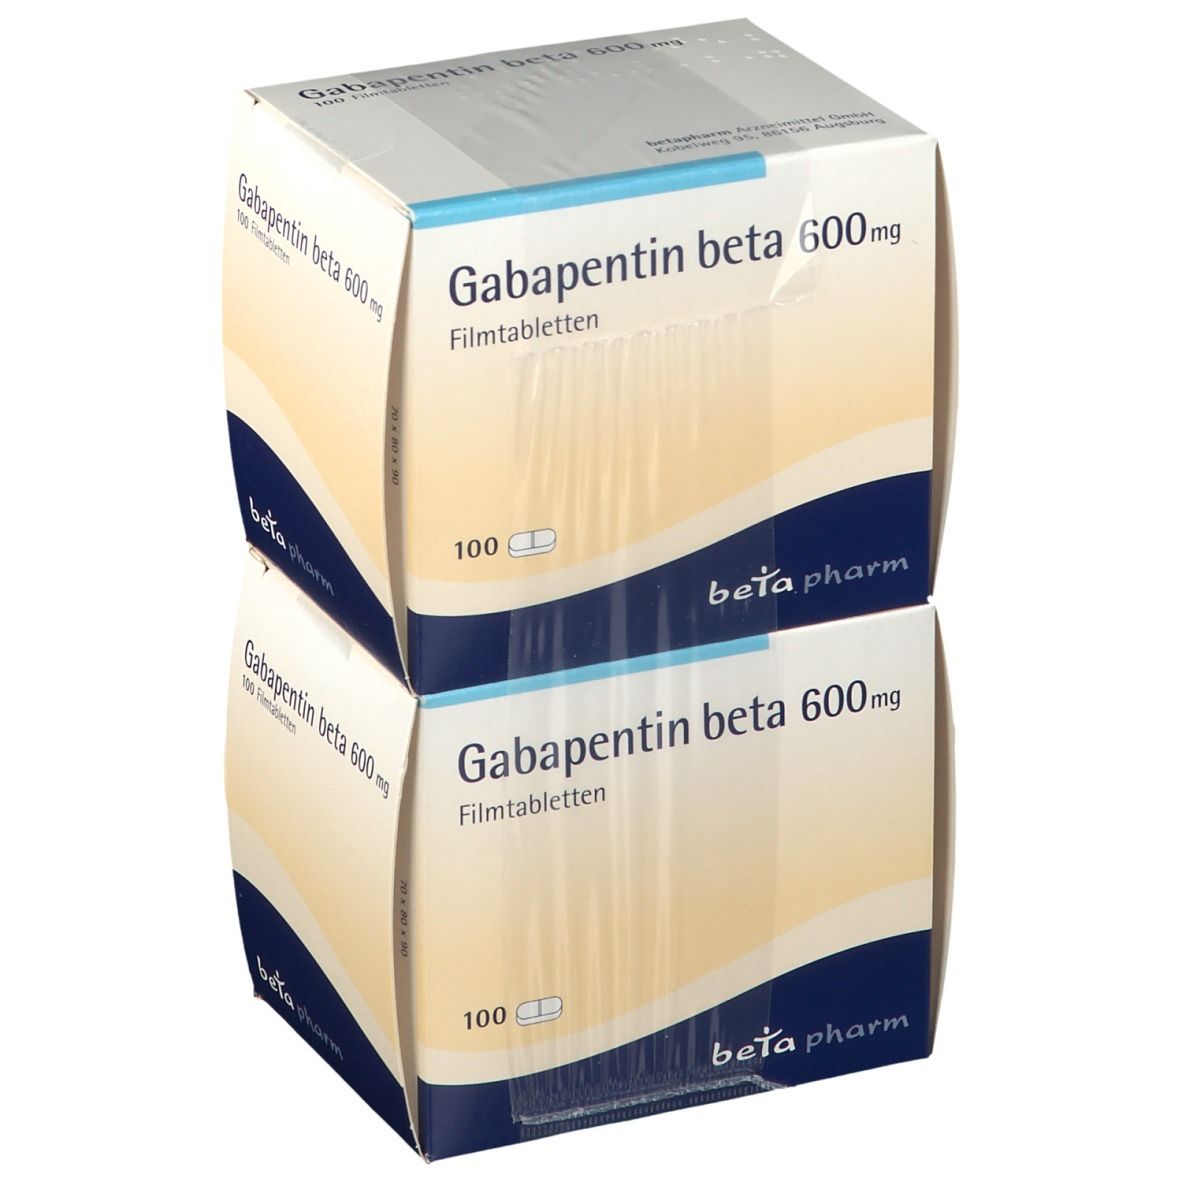 Gabapentin beta 600 mg